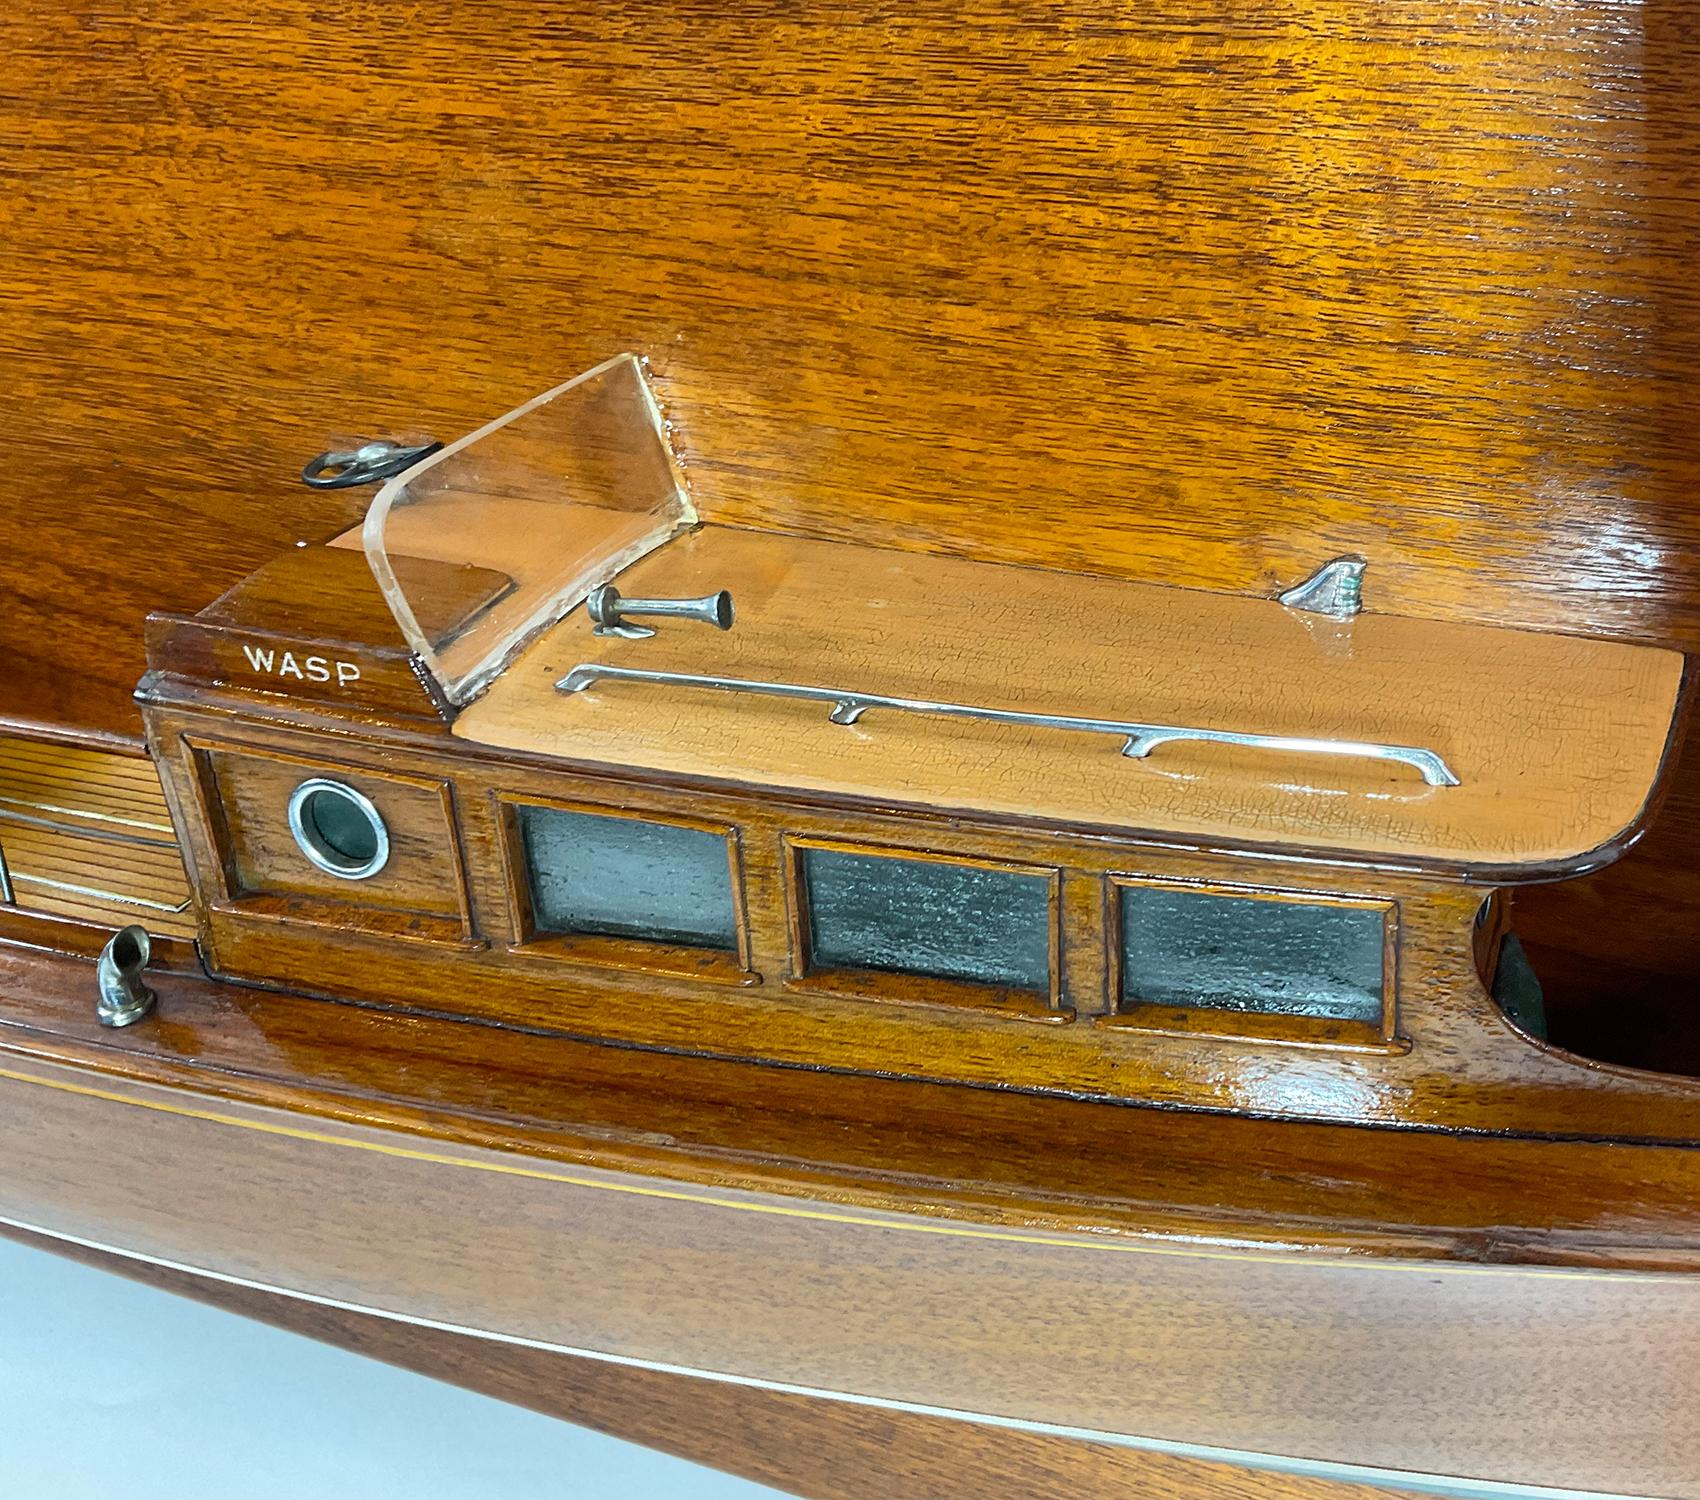 Architektonisches Halbmodell der Wrigley Yacht Wasp (Holz) im Angebot